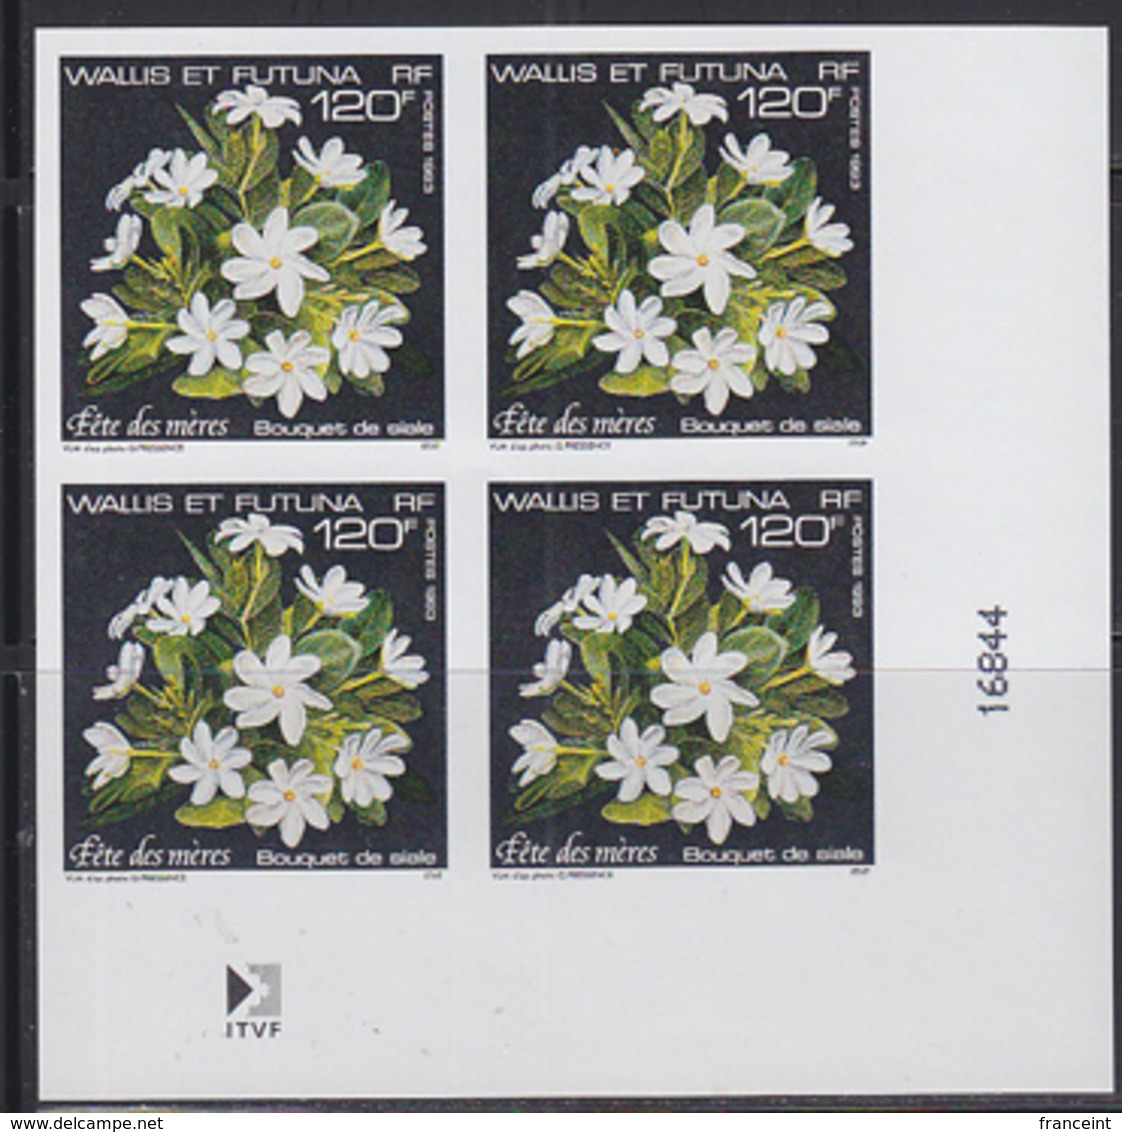 WALLIS & FUTUNA (1993) Siale (Gardenia Taitensis). Imperforate Corner Block Of 4. Scott No 446, Yvert No 467. - Imperforates, Proofs & Errors